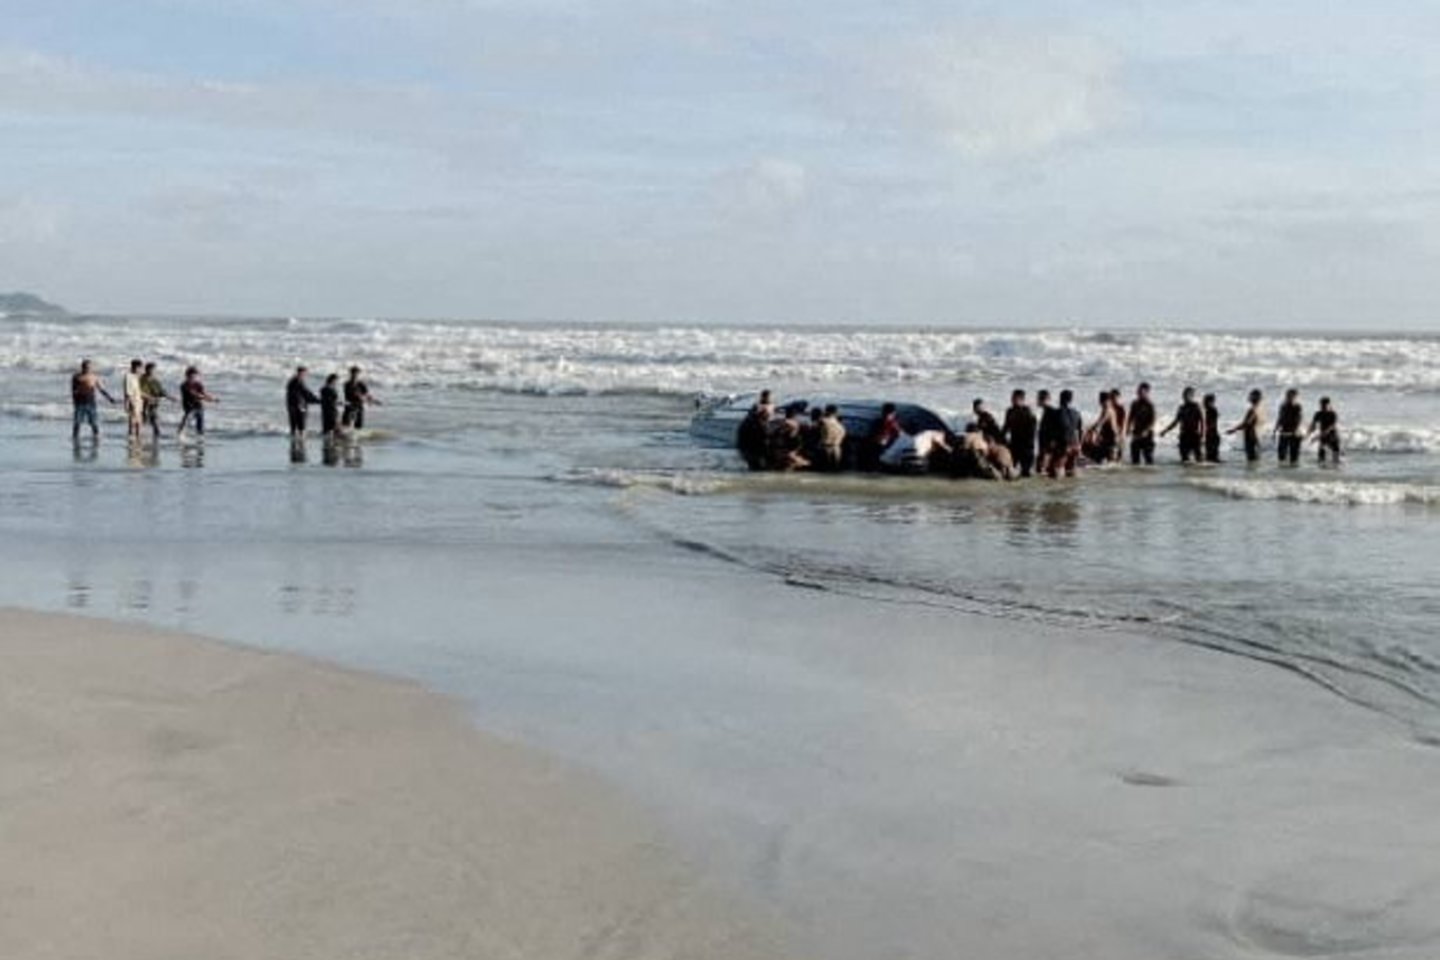  Malaizijoje nuskendus laivui žuvo 11 indoneziečių, dar 27 dingo.  <br>Reuters/Scanpix nuotr.